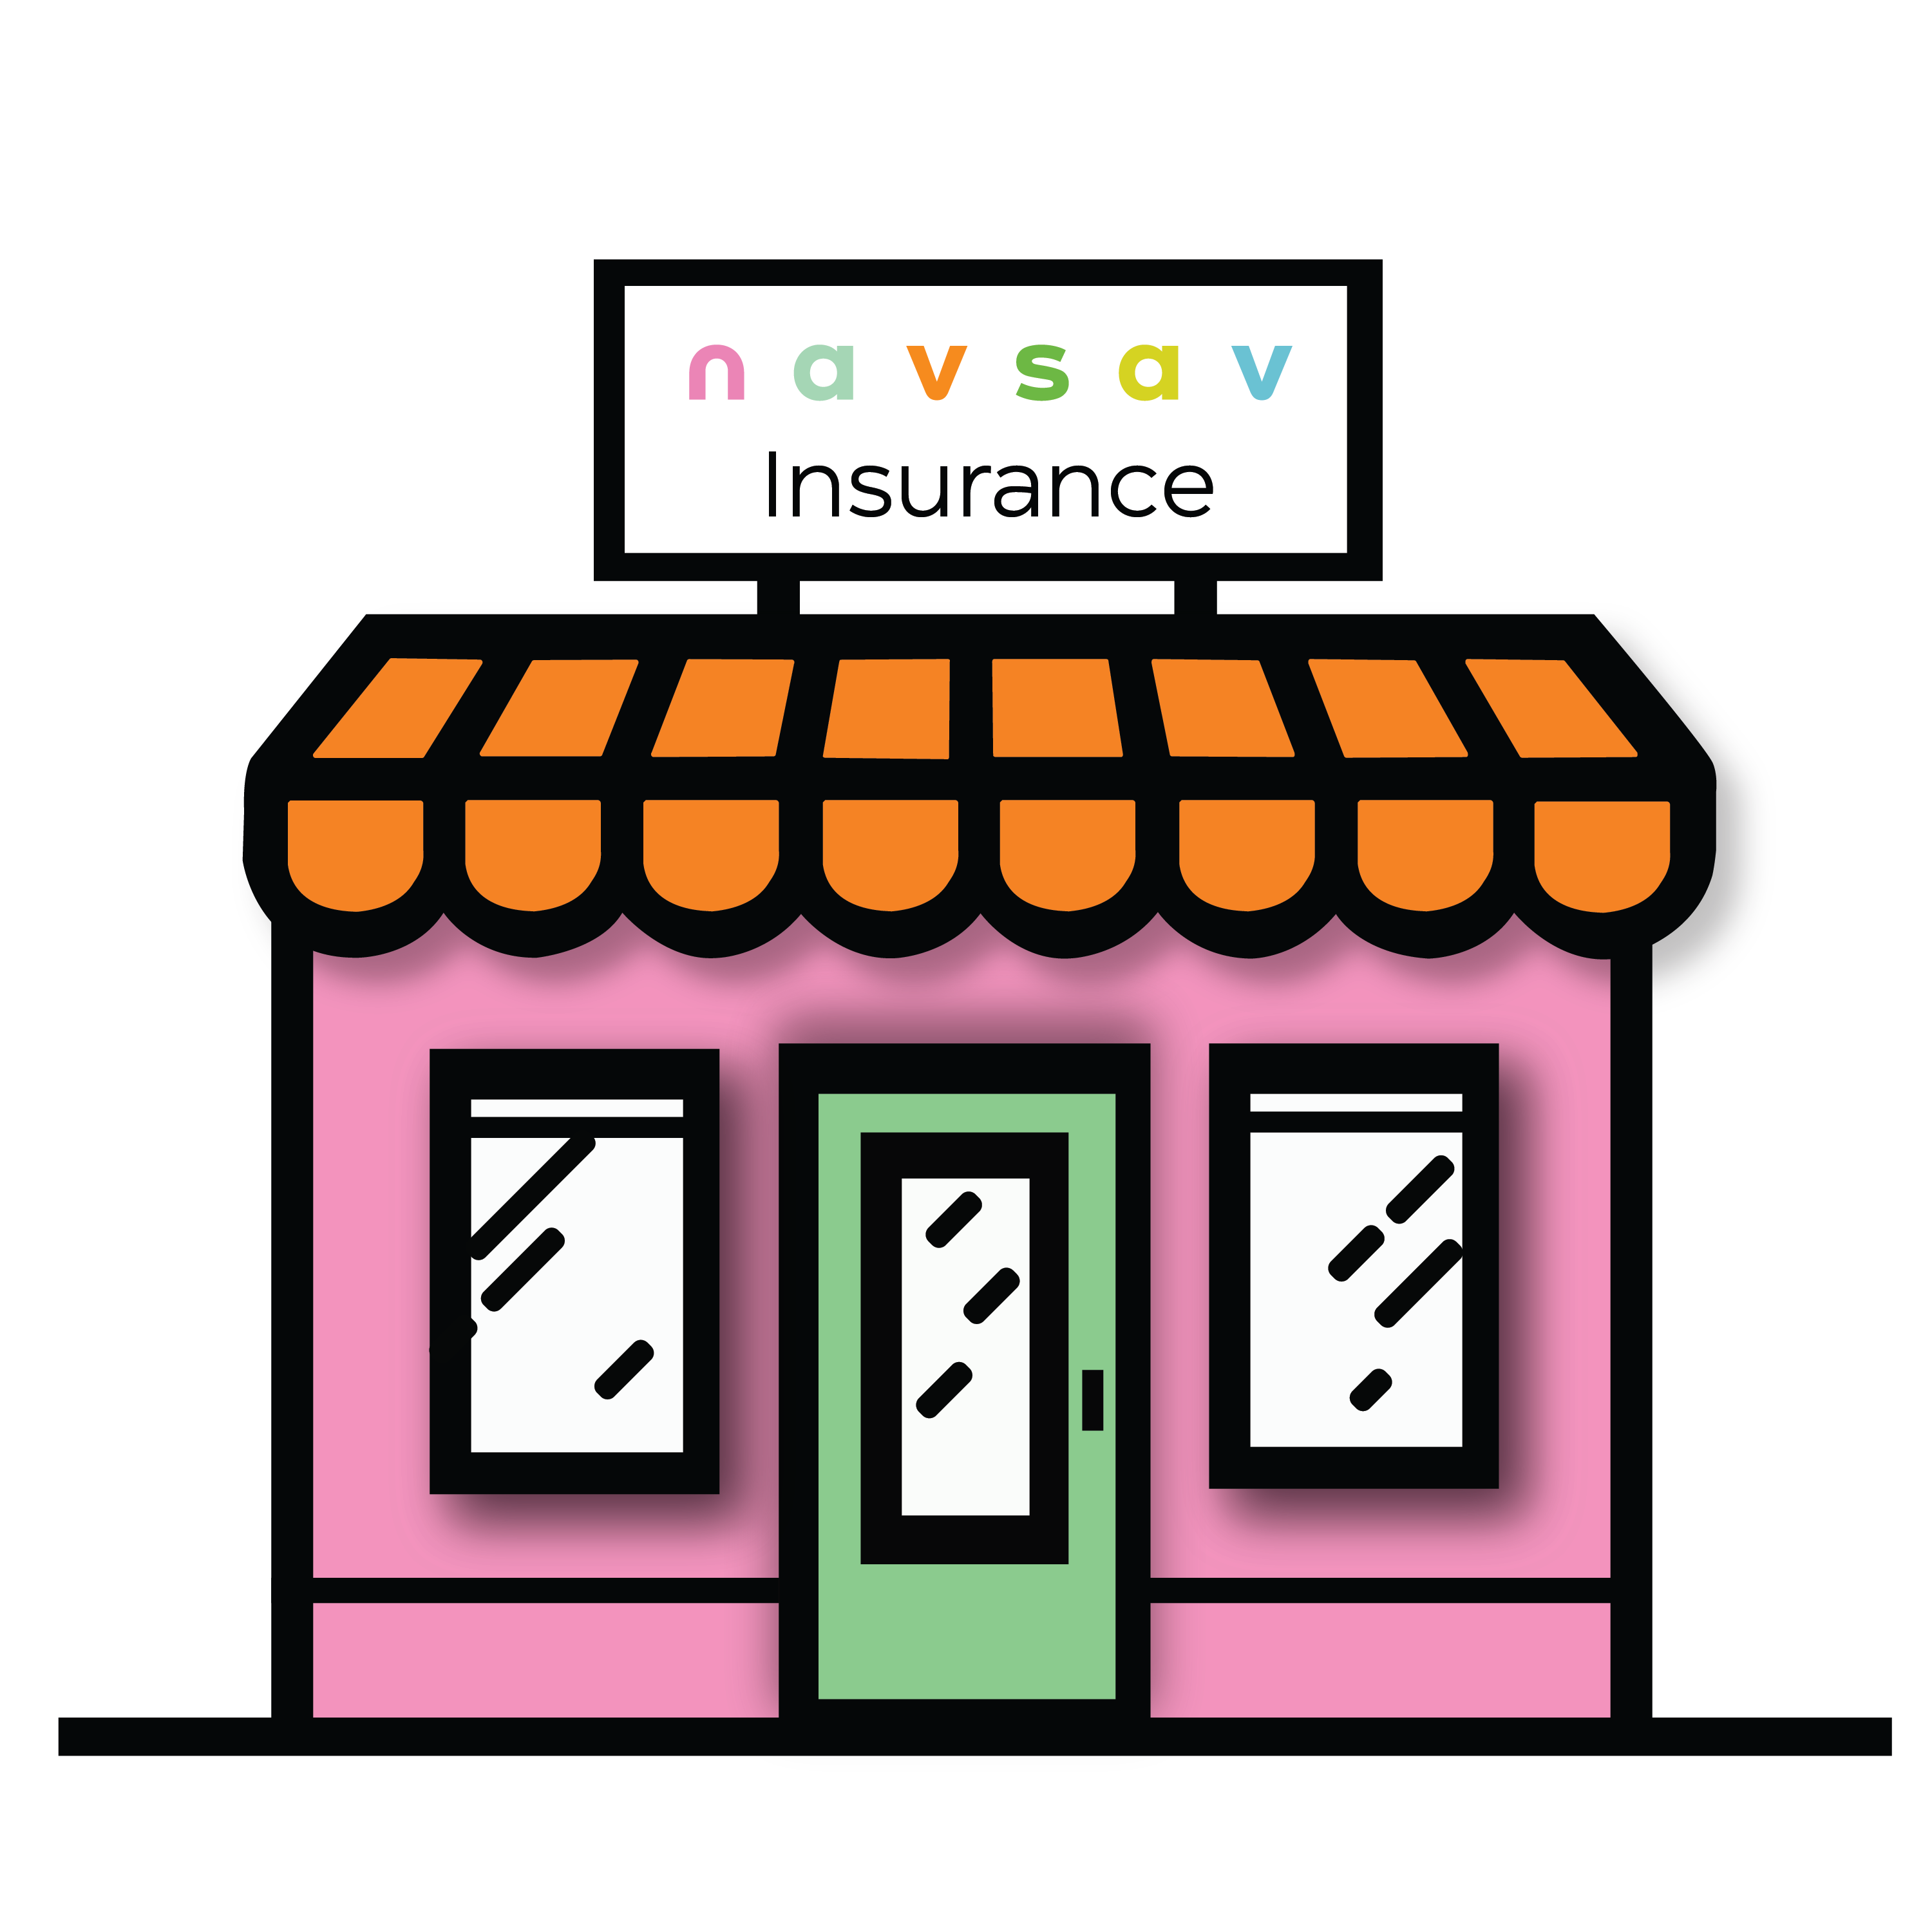 Image 2 | NavSav Insurance - Port Richey II